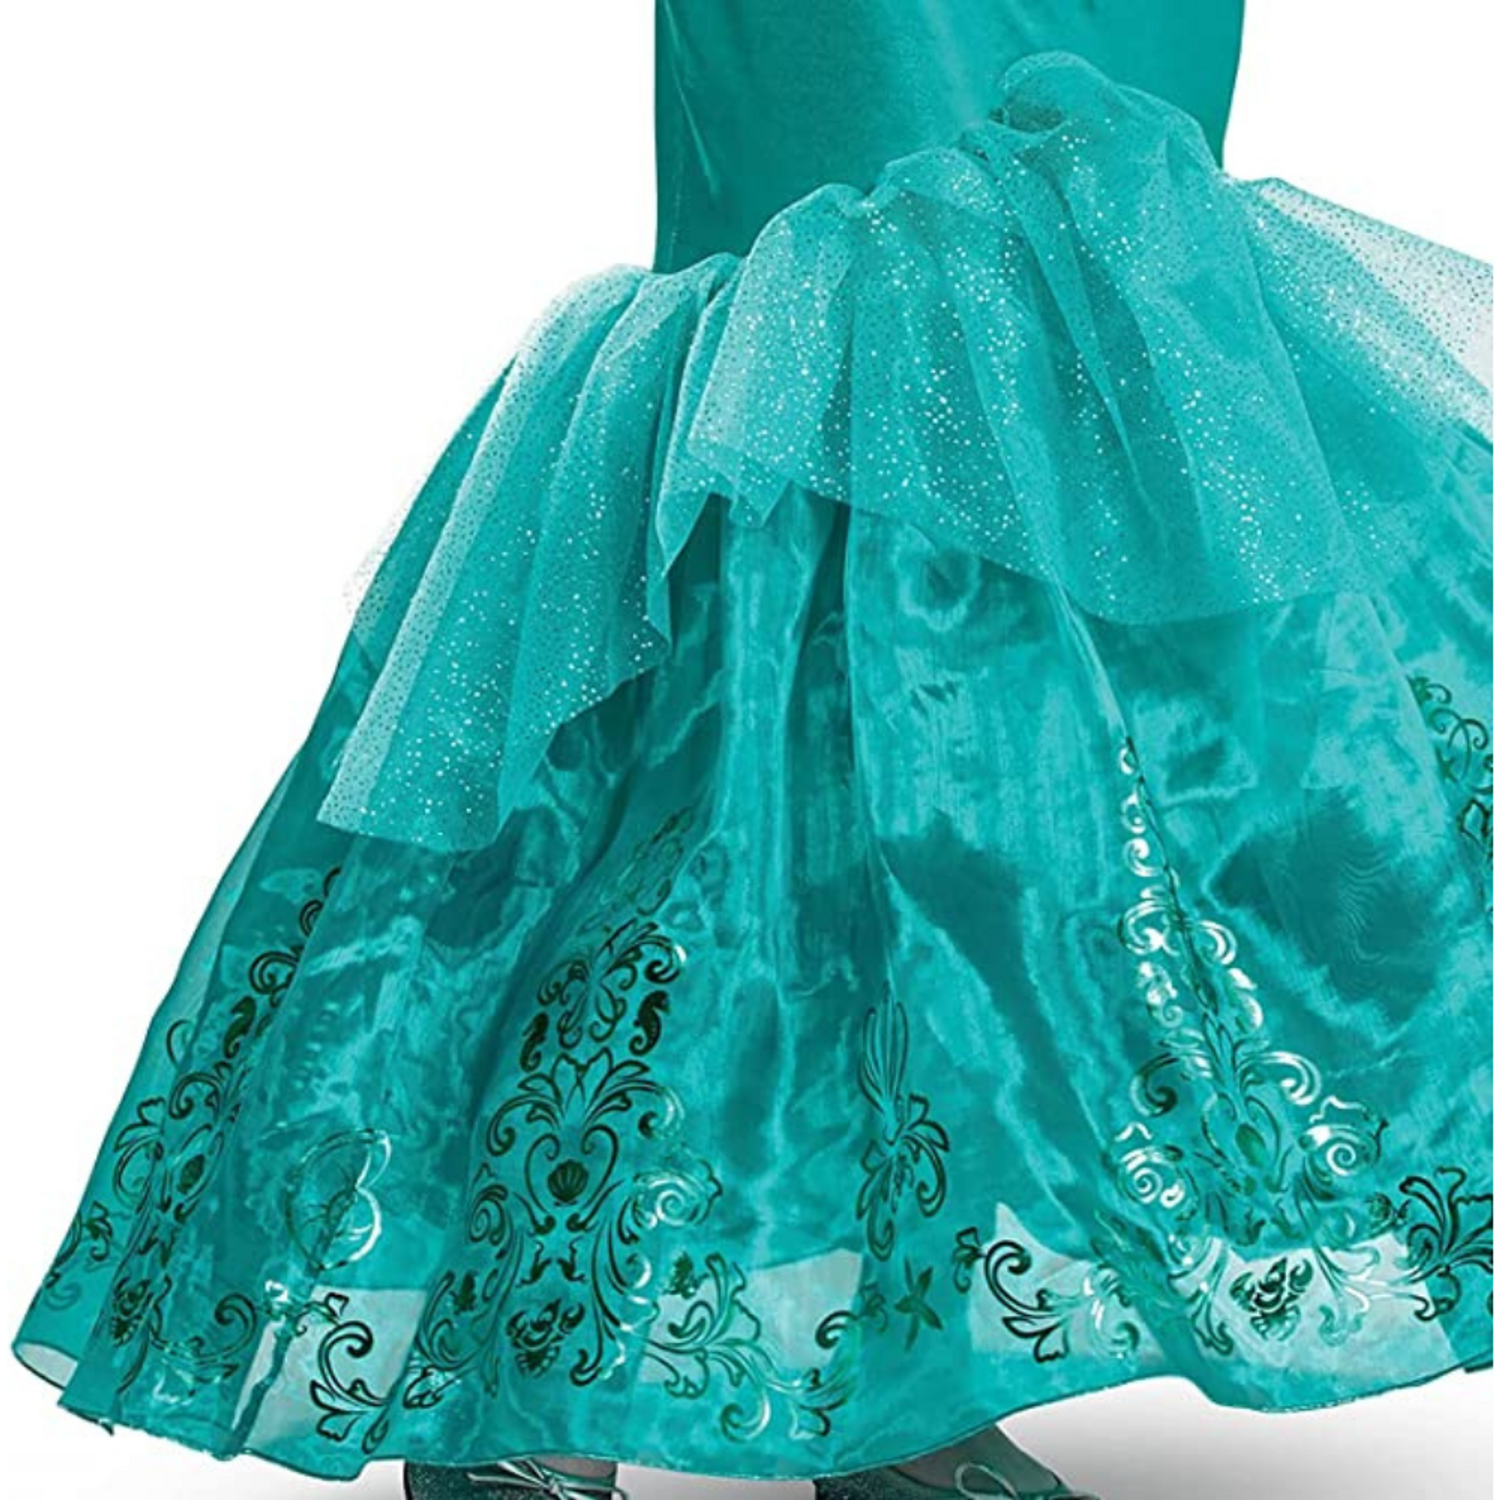 Disguise Girl's Prestige Disney Princess Dress Pretend Play Costume Dress-Up (Ariel, XS (3T-4T)) - image 2 of 4